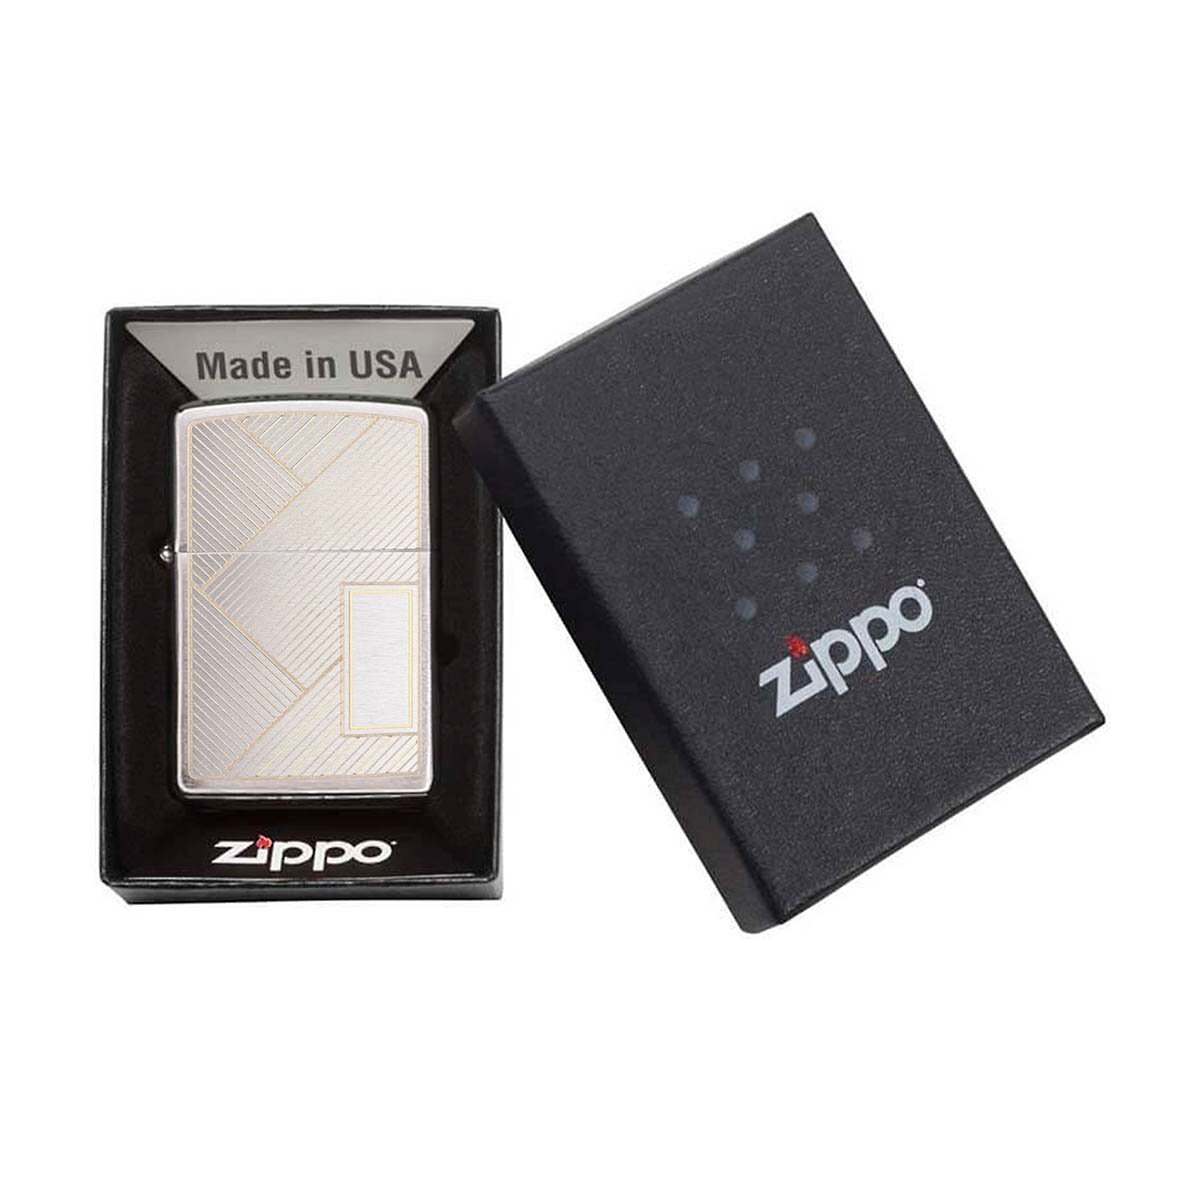 Encendedor Zippo Spring Special Diagonales con Rectángulo Modelo Mz49209